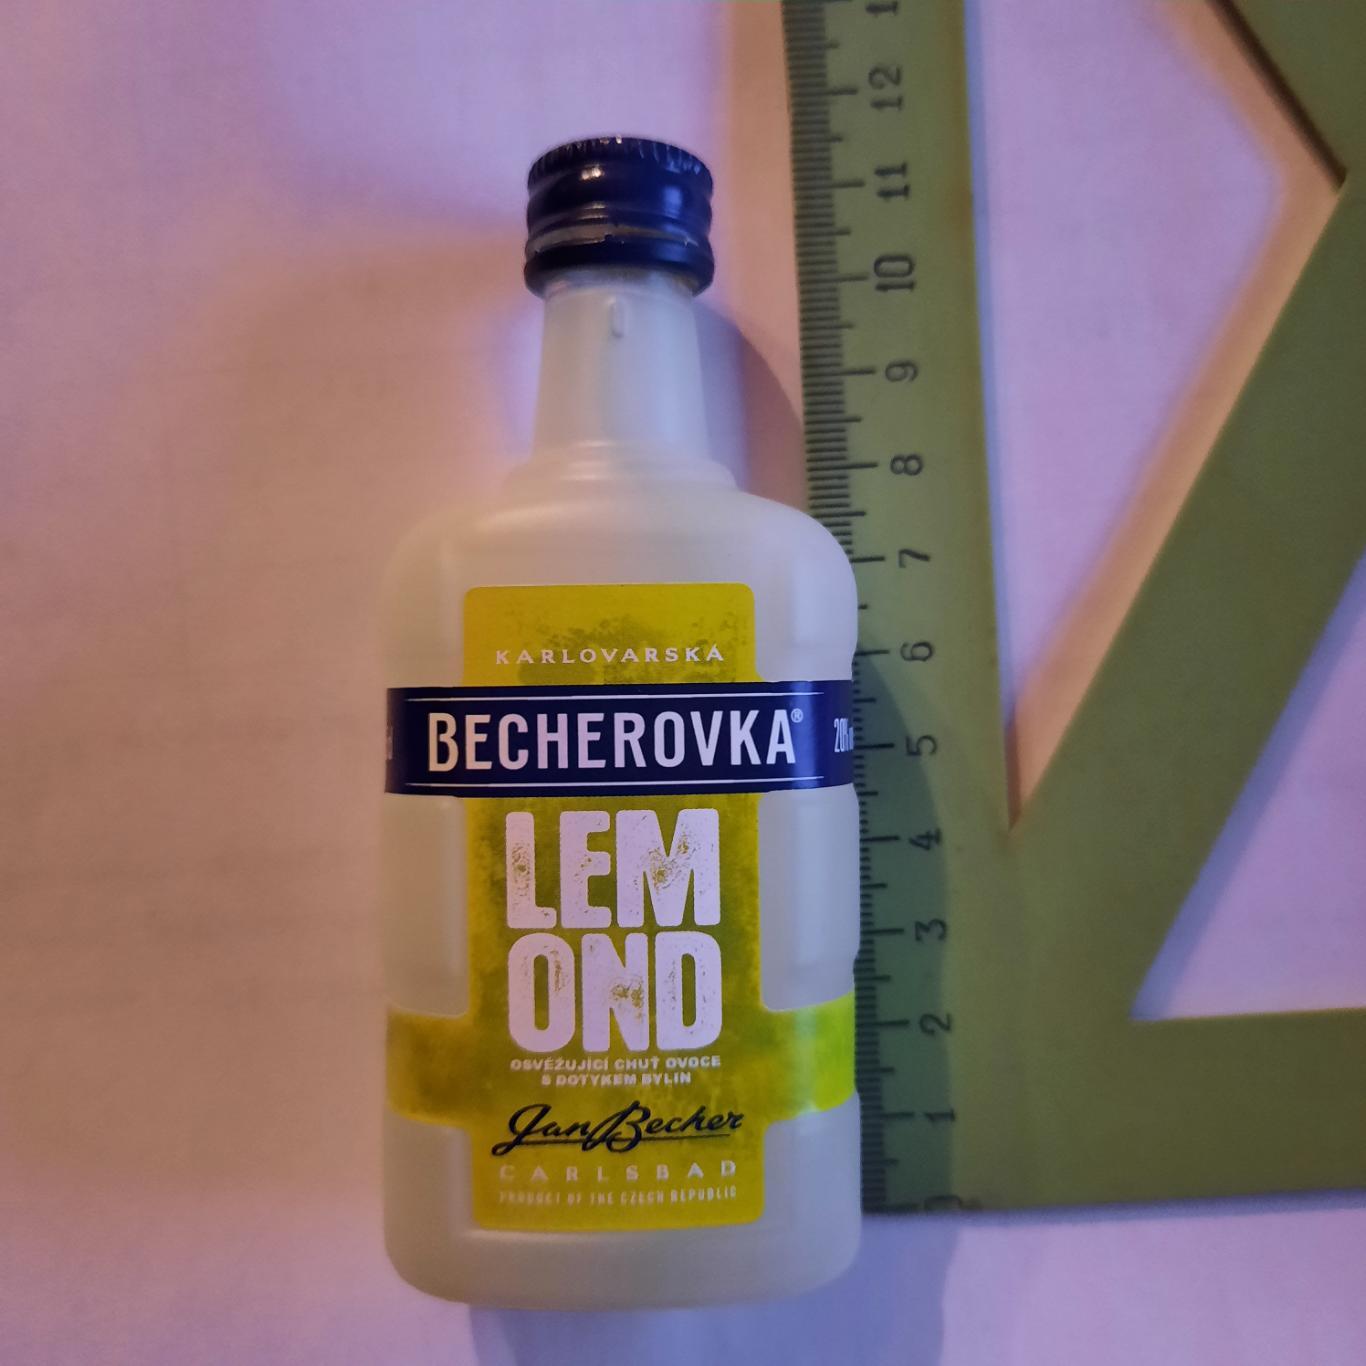 Мини бутылка Бехеровка (Becherovka)стекло, пустая.